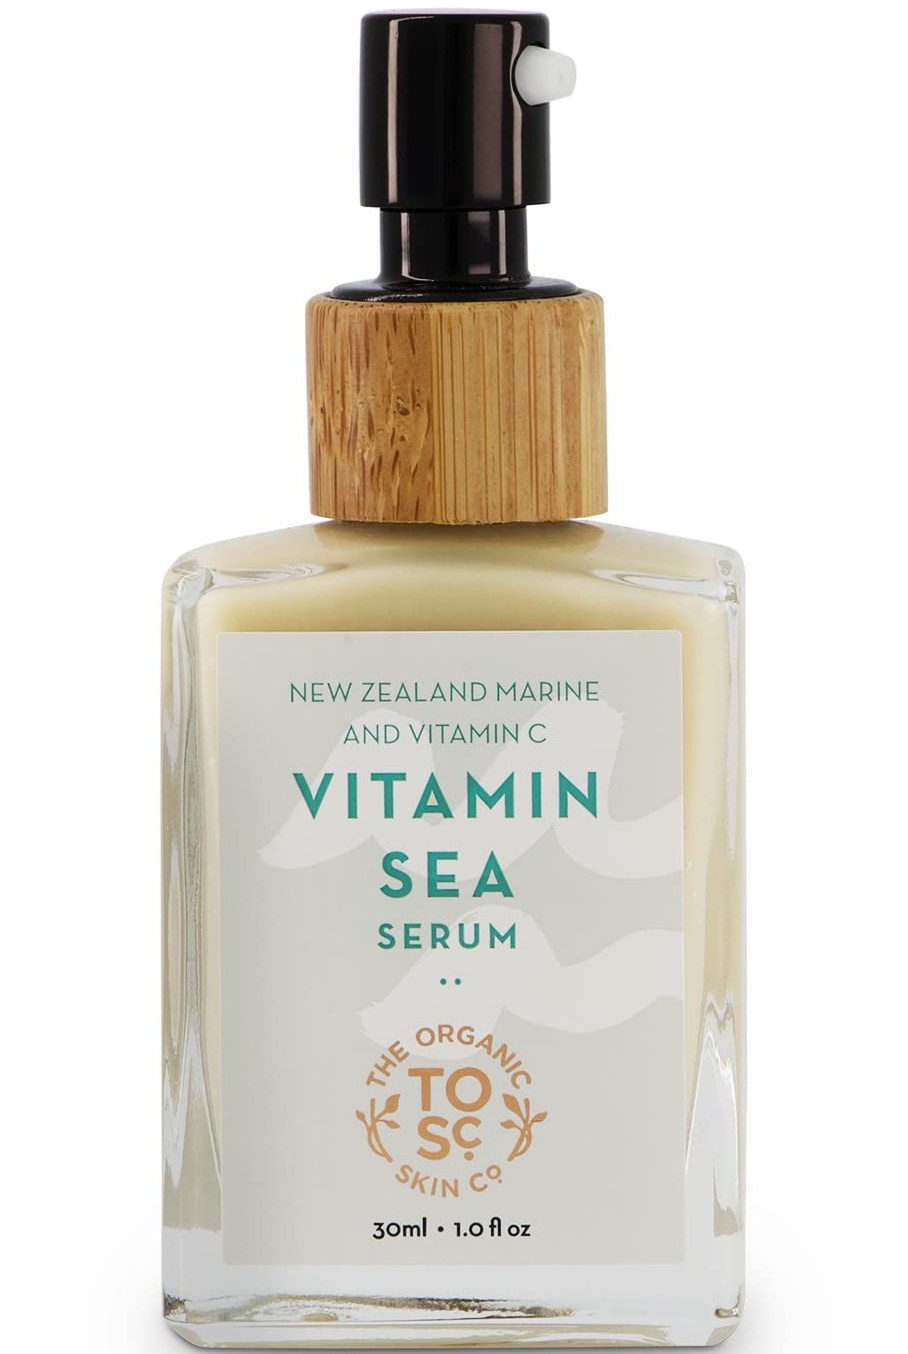 The Organic skin co. Vitamin Sea Serum